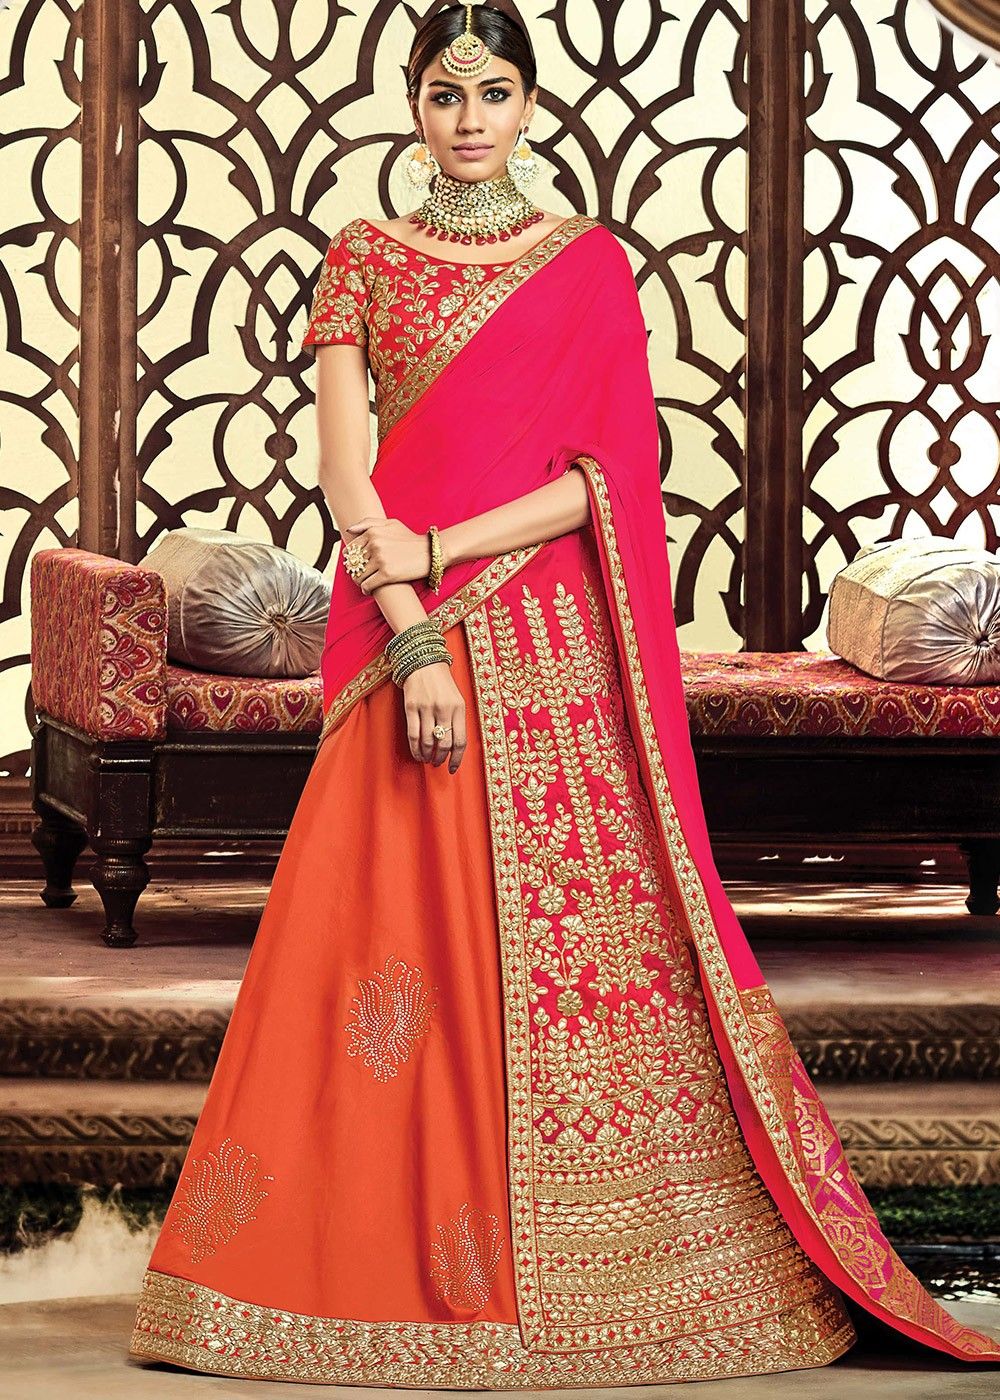 Woman in Traditional Indian Costume Lehenga Choli or Sari or Saree Stock  Image - Image of elegant, classical: 218446179